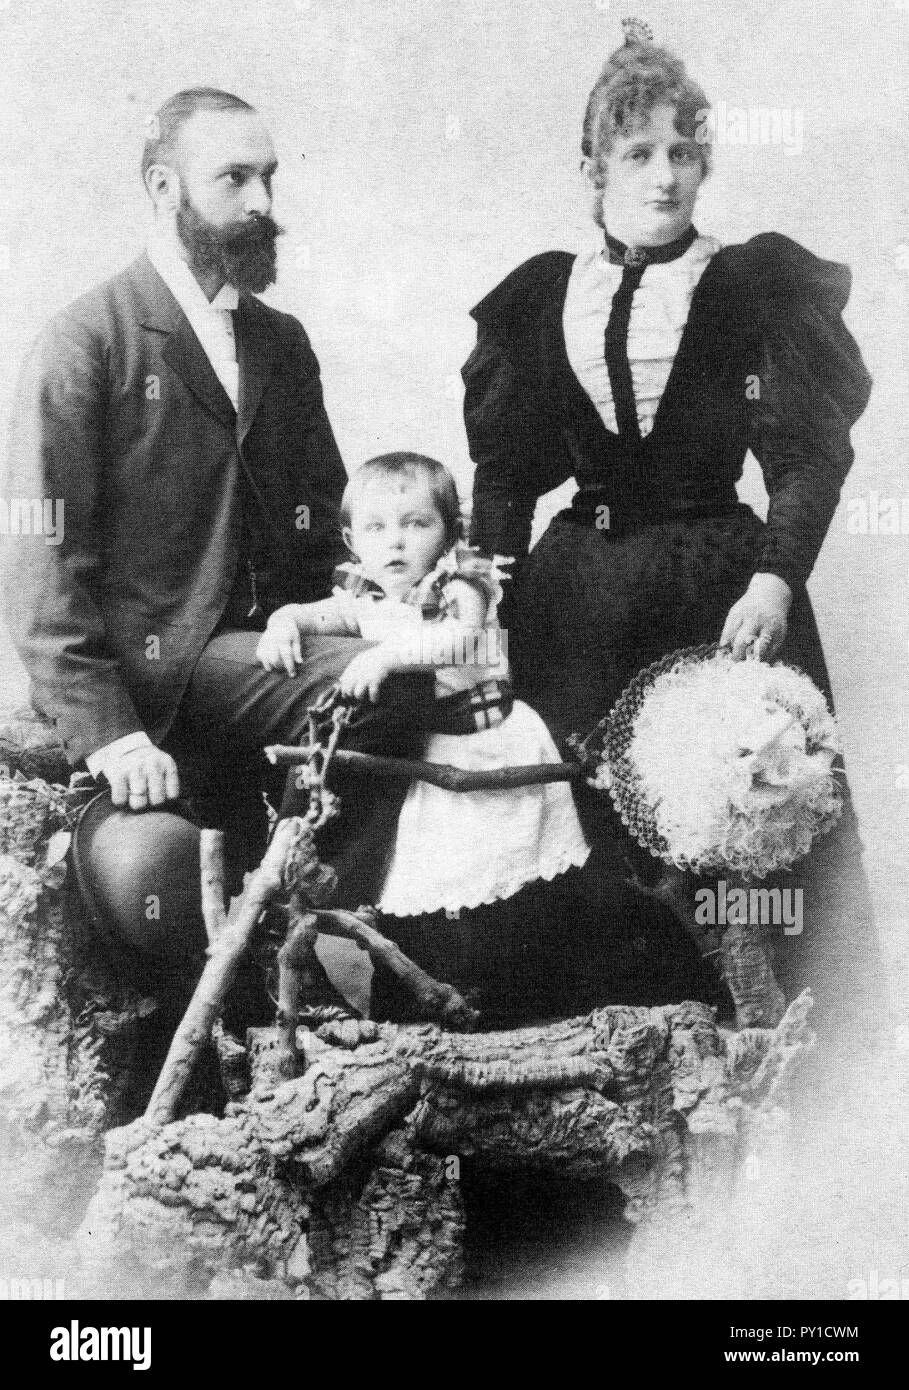 Bünker Johann Reinhard Familie um 1900. Stock Photo